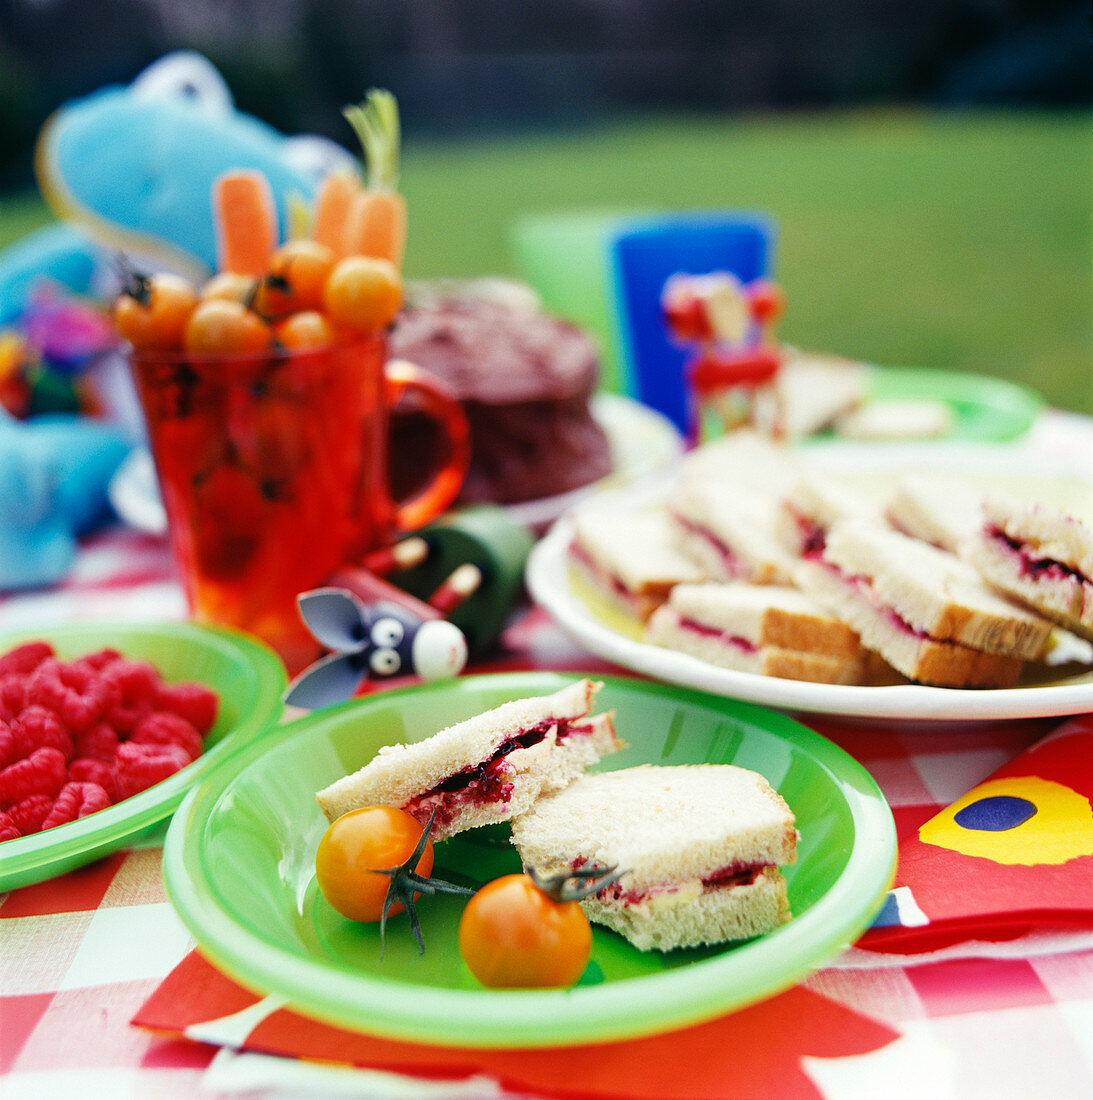 Children's picnic food